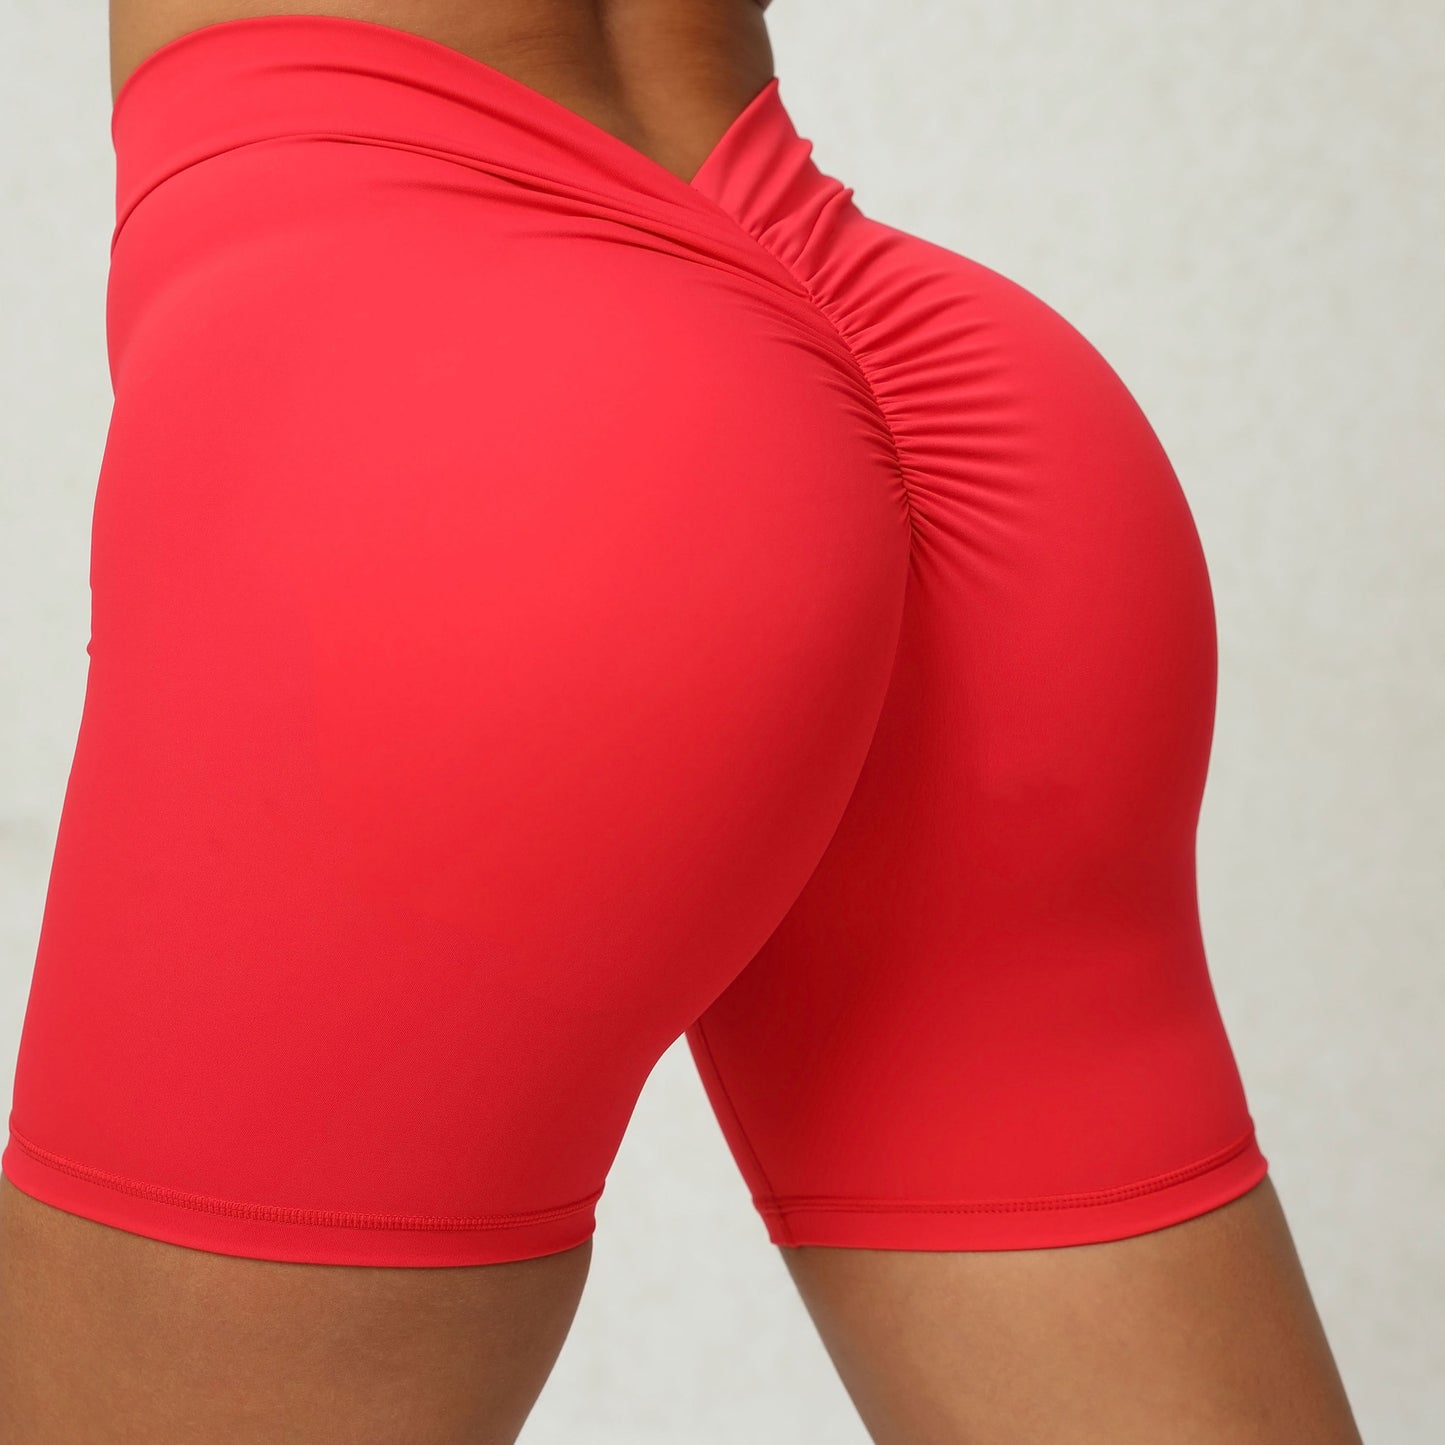 Back Waist Deep V-shaped Wrinkle Tight Hip Peach Hip Fitness Shorts 15 Colors